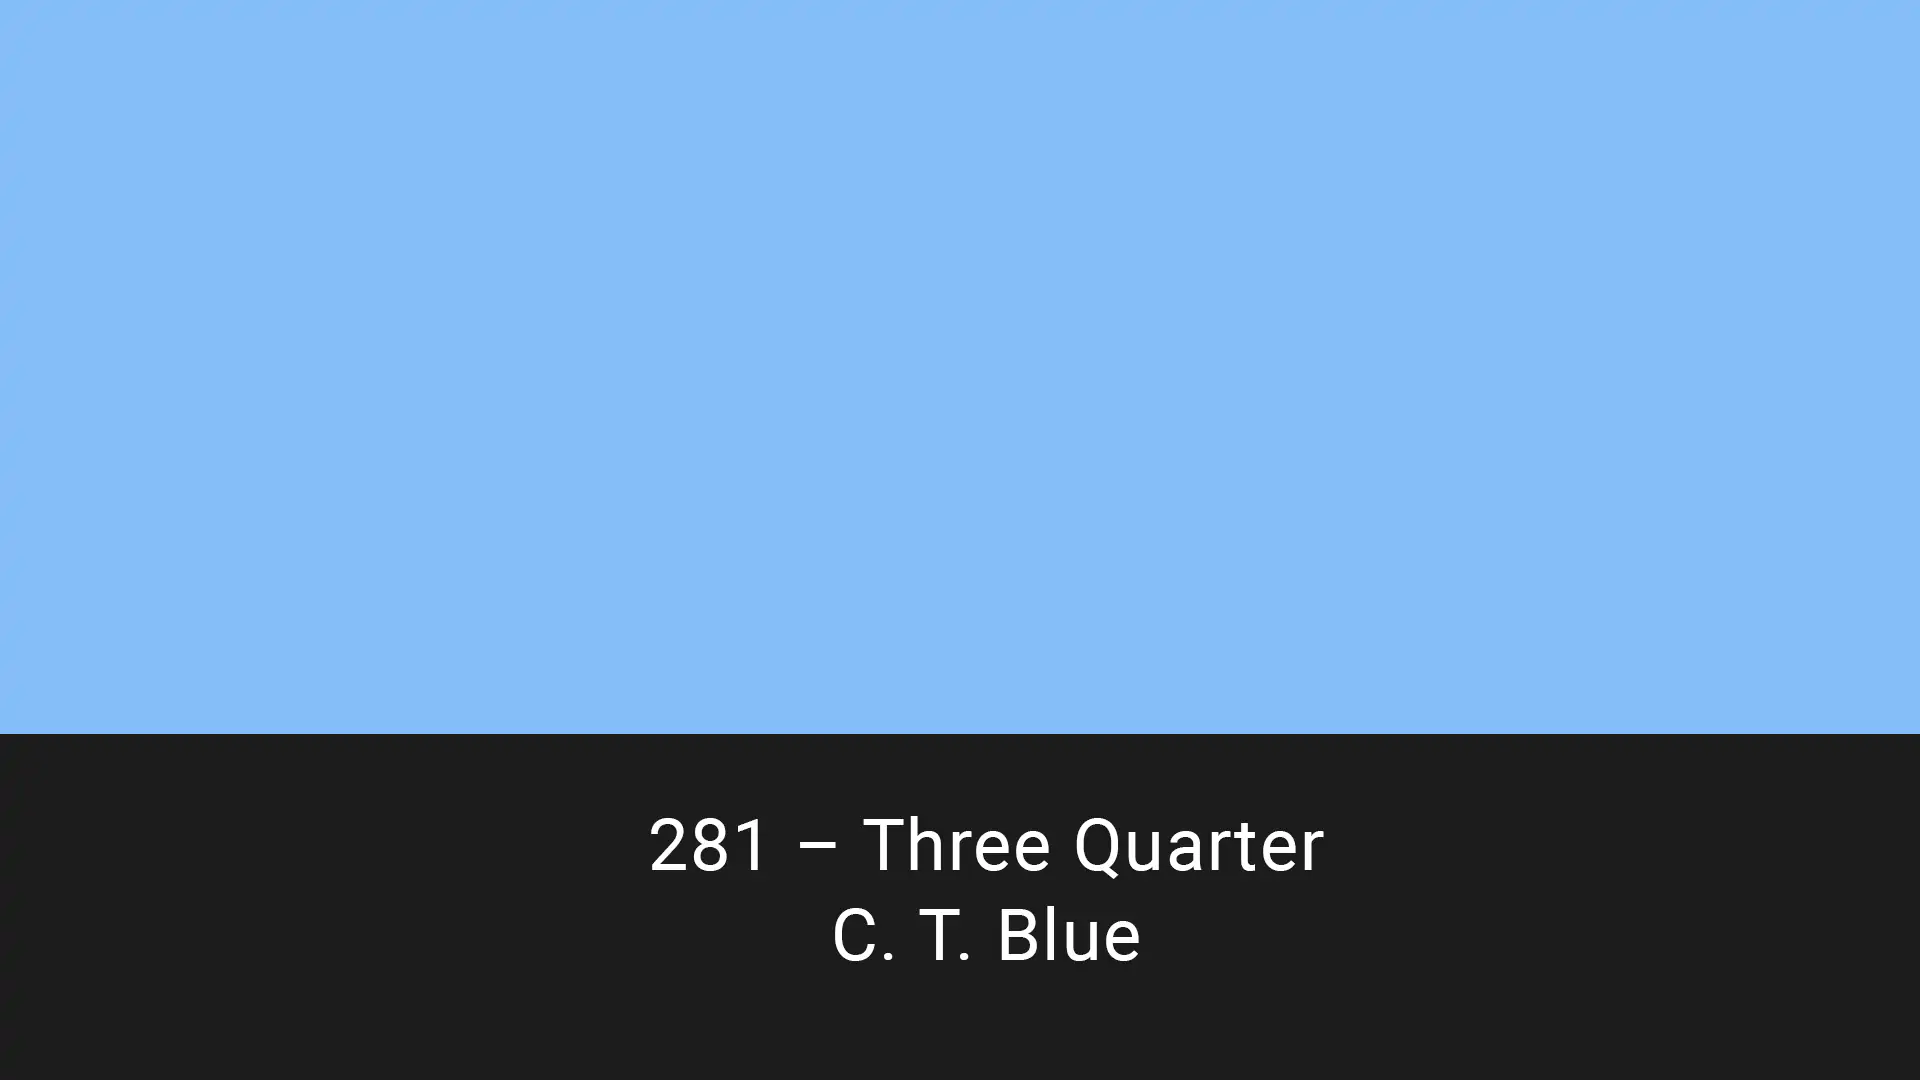 Cotech filters 281 Three Quarter C.T. Blue